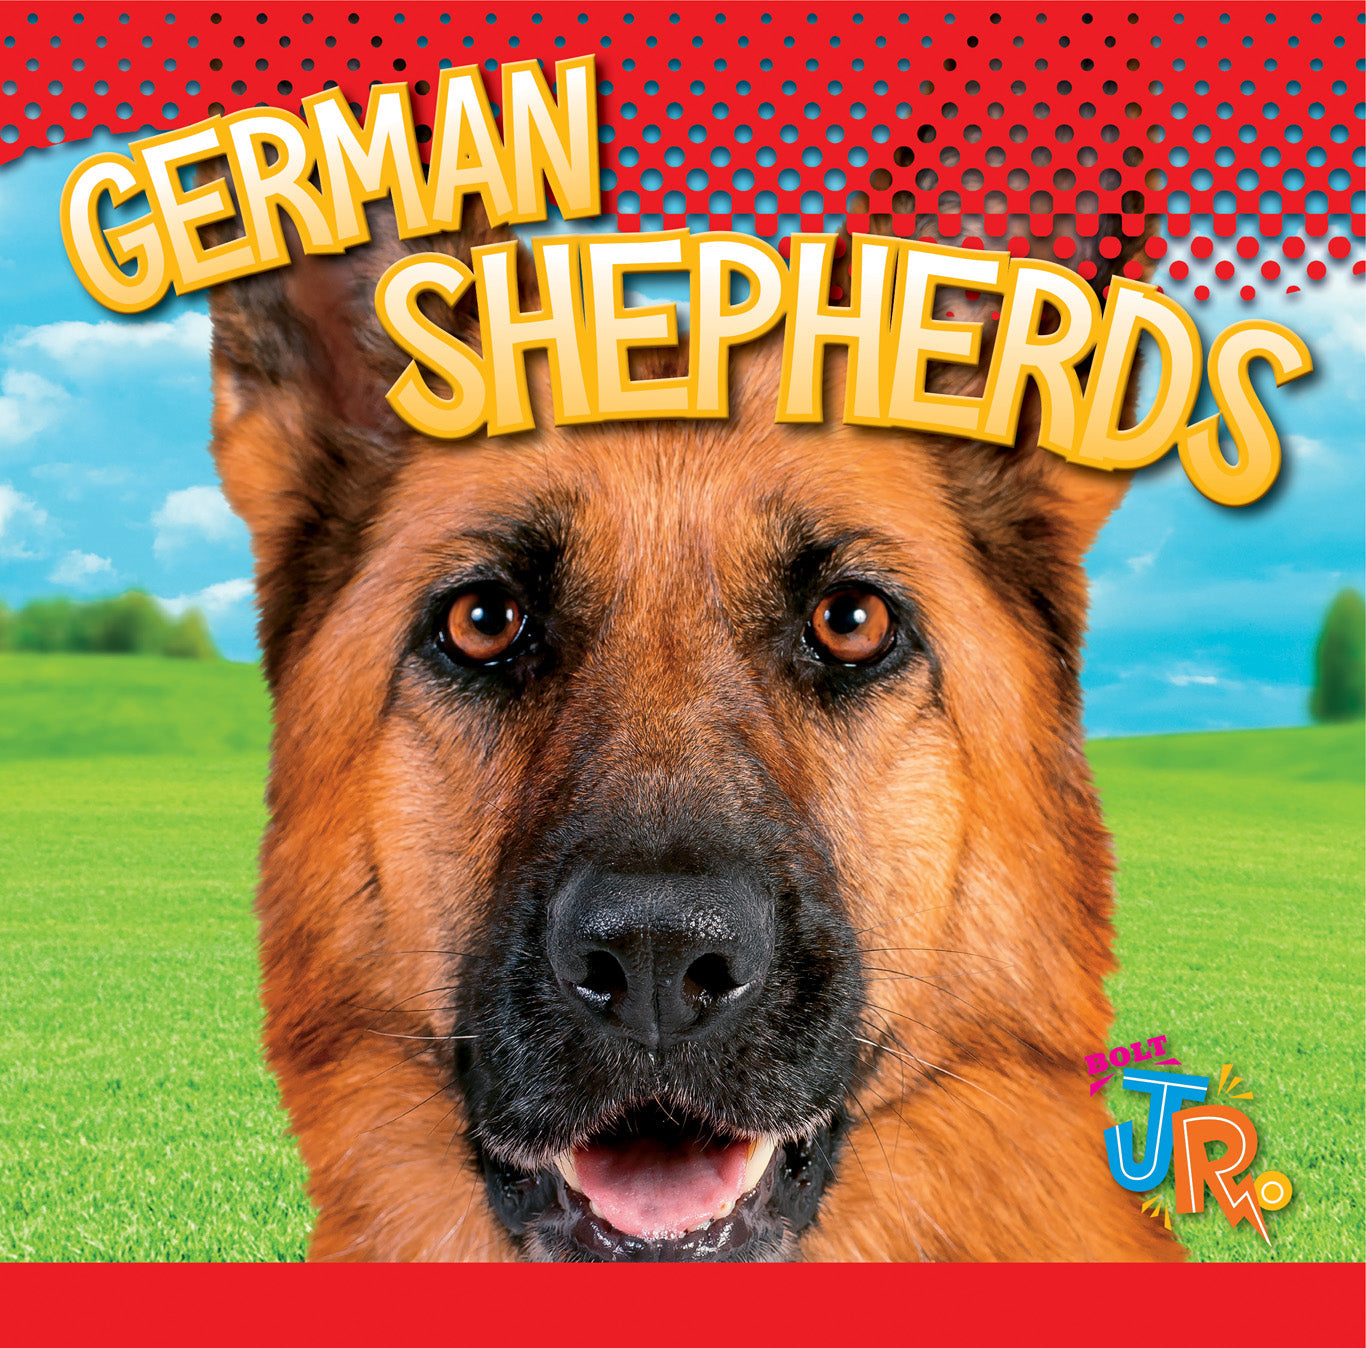 Our Favorite Dogs: German Shepherds